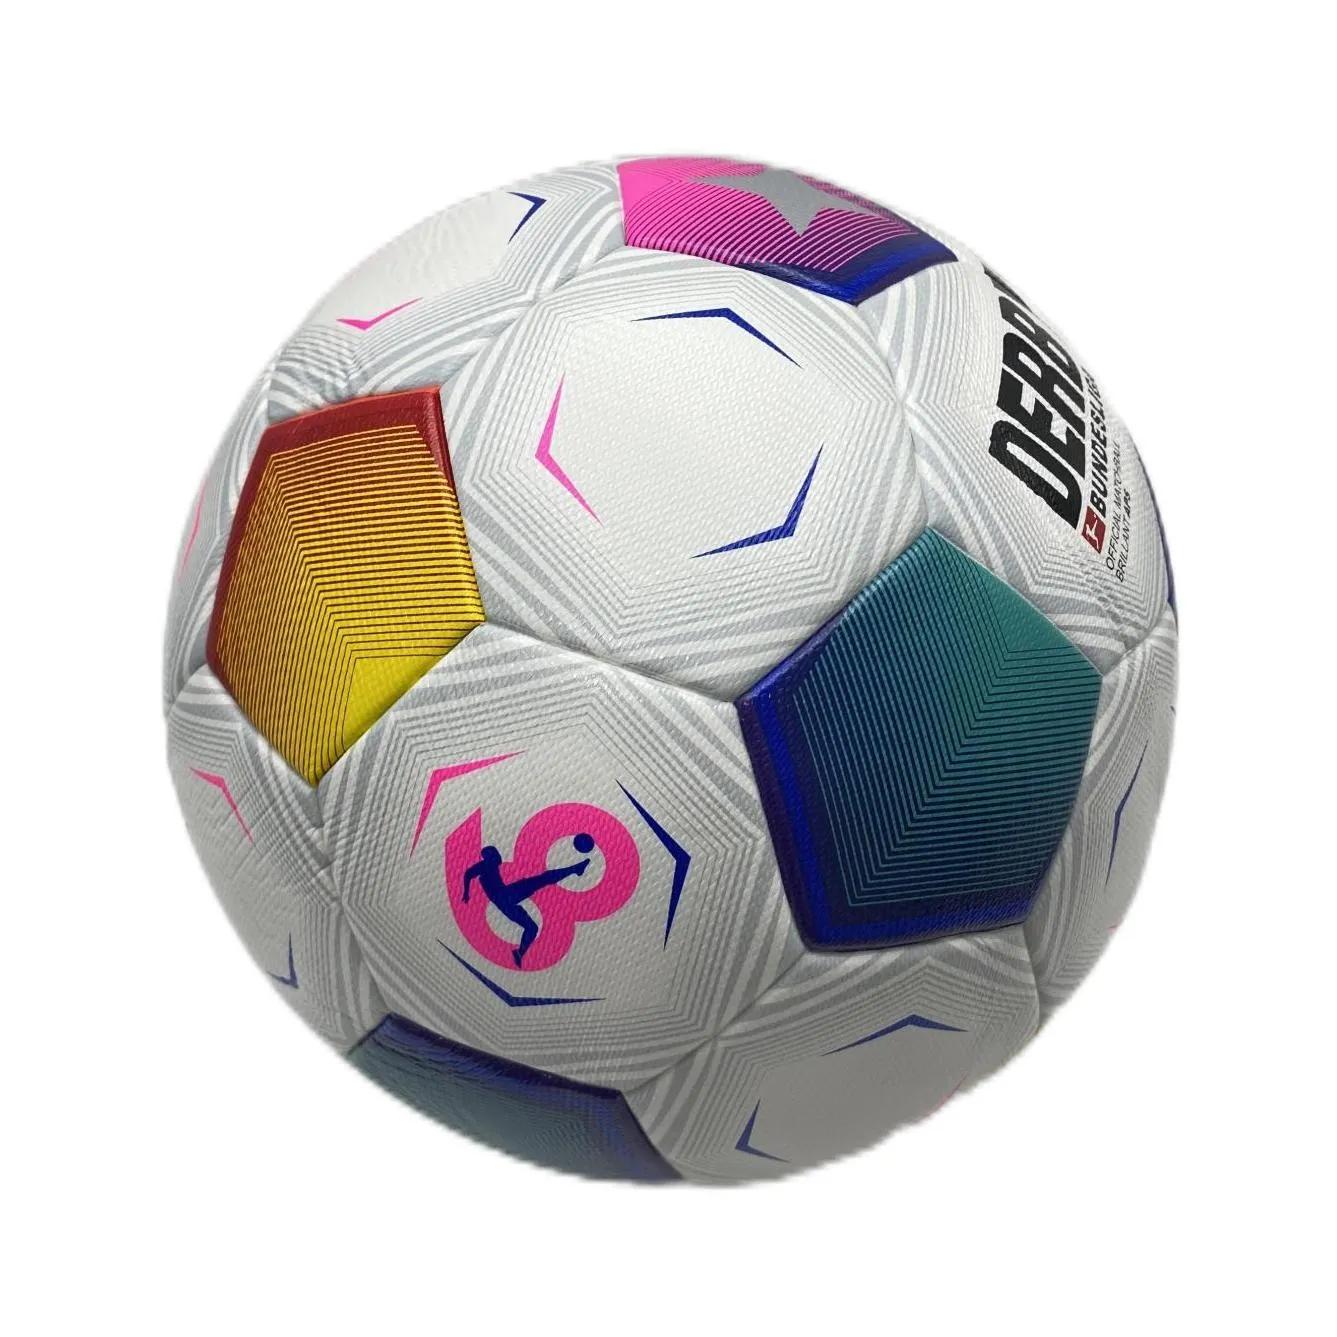 Soccer Ball Official match ball of the 23 24 season for all major leagues Football Balls213131231